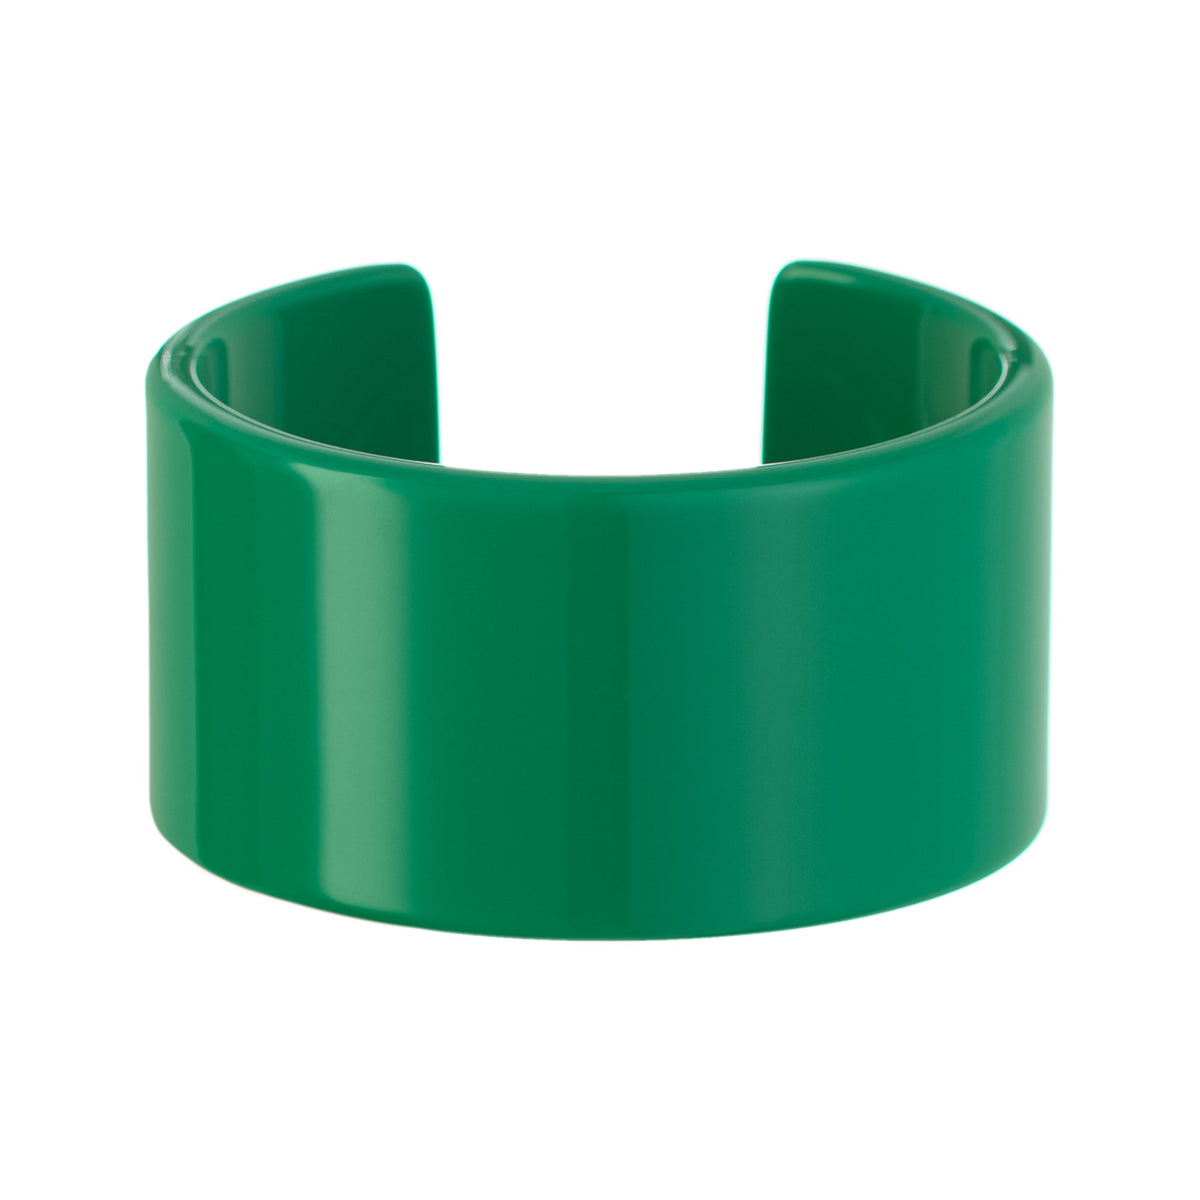 Jumbo Cuff in Bright Green - Machete Jewelry